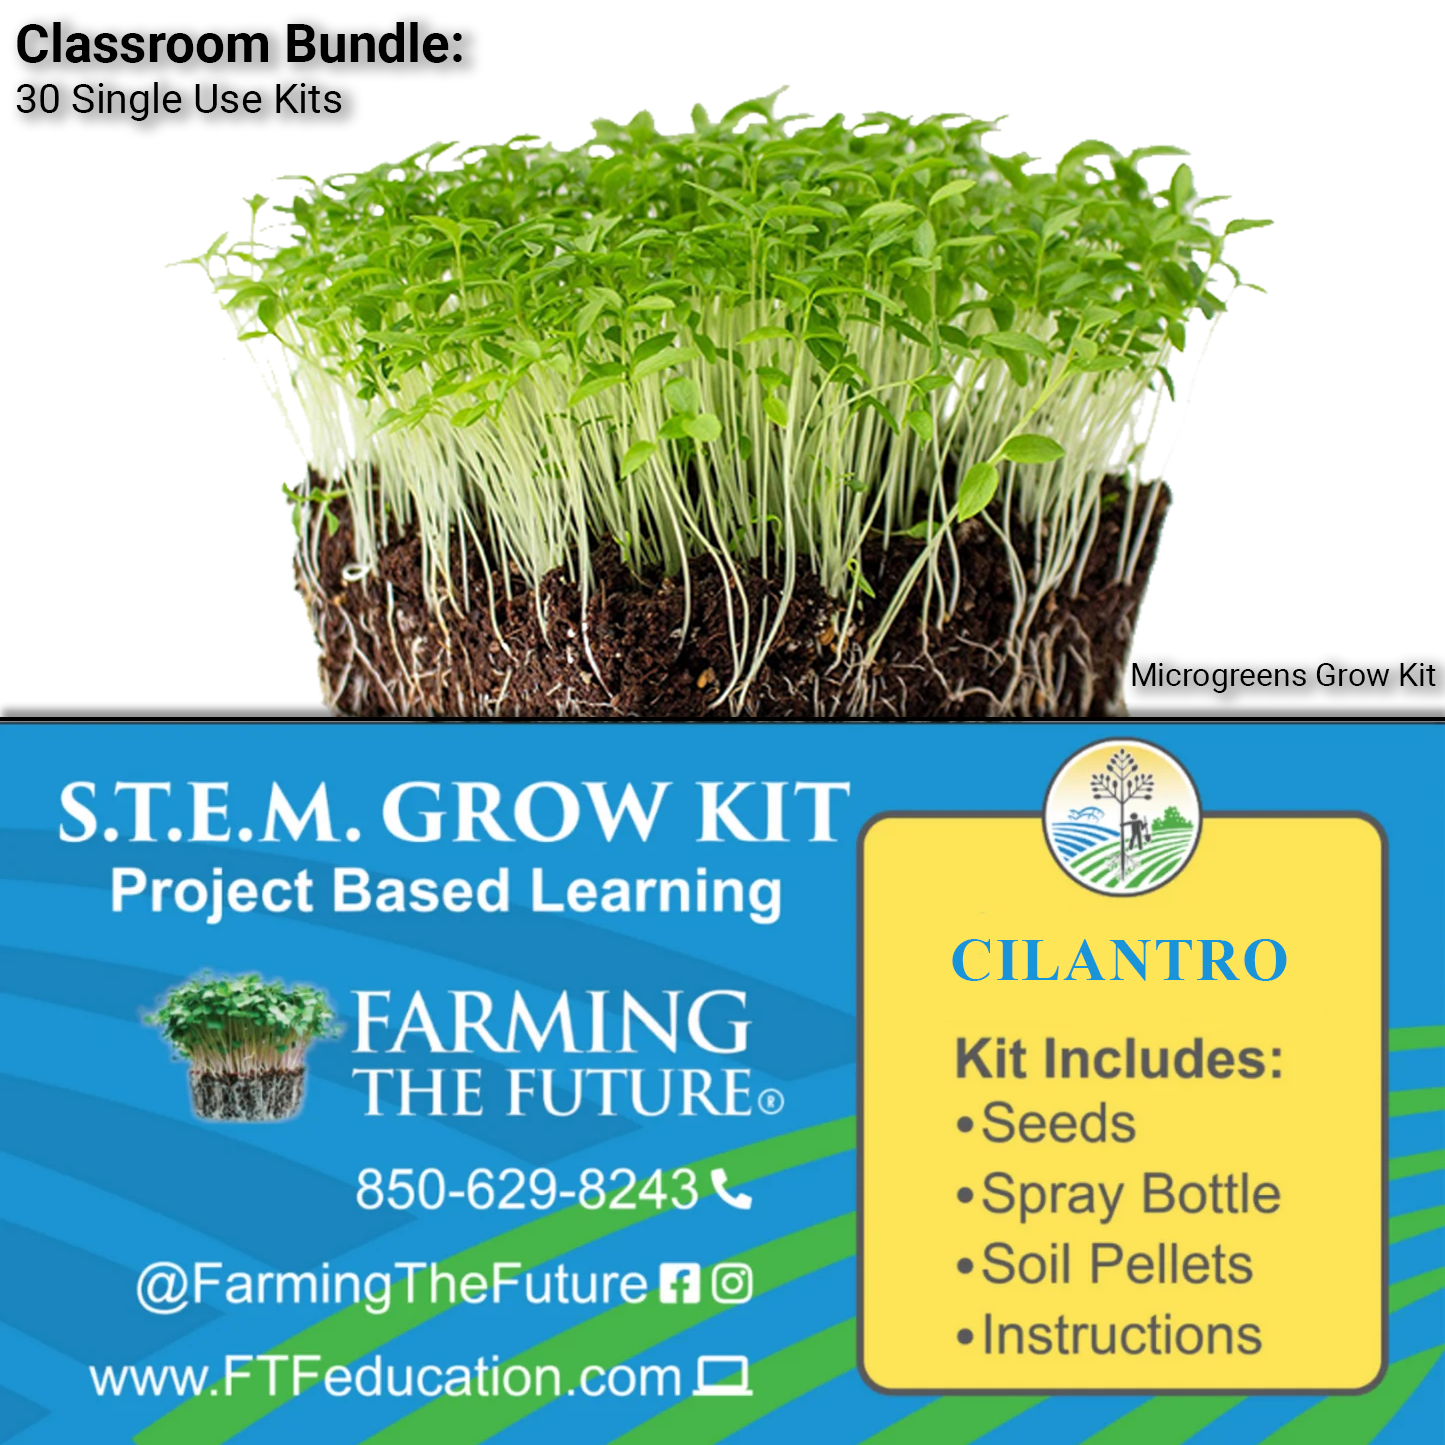 K-12 STEM Student Cilantro Microgreen Kit - Classroom Bundle